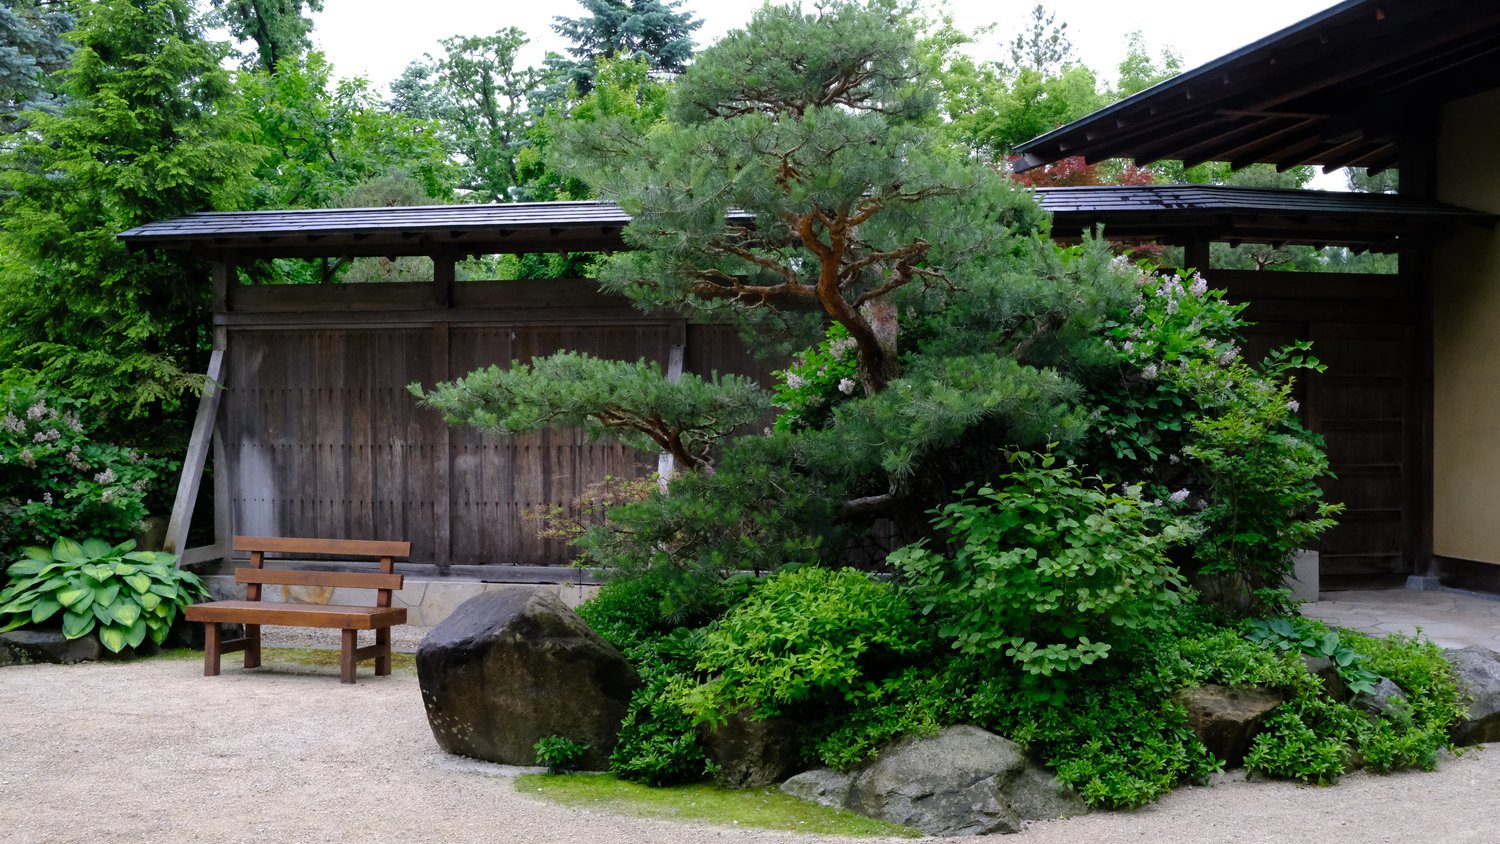 Wooden bench inside the Seimon (main gate).